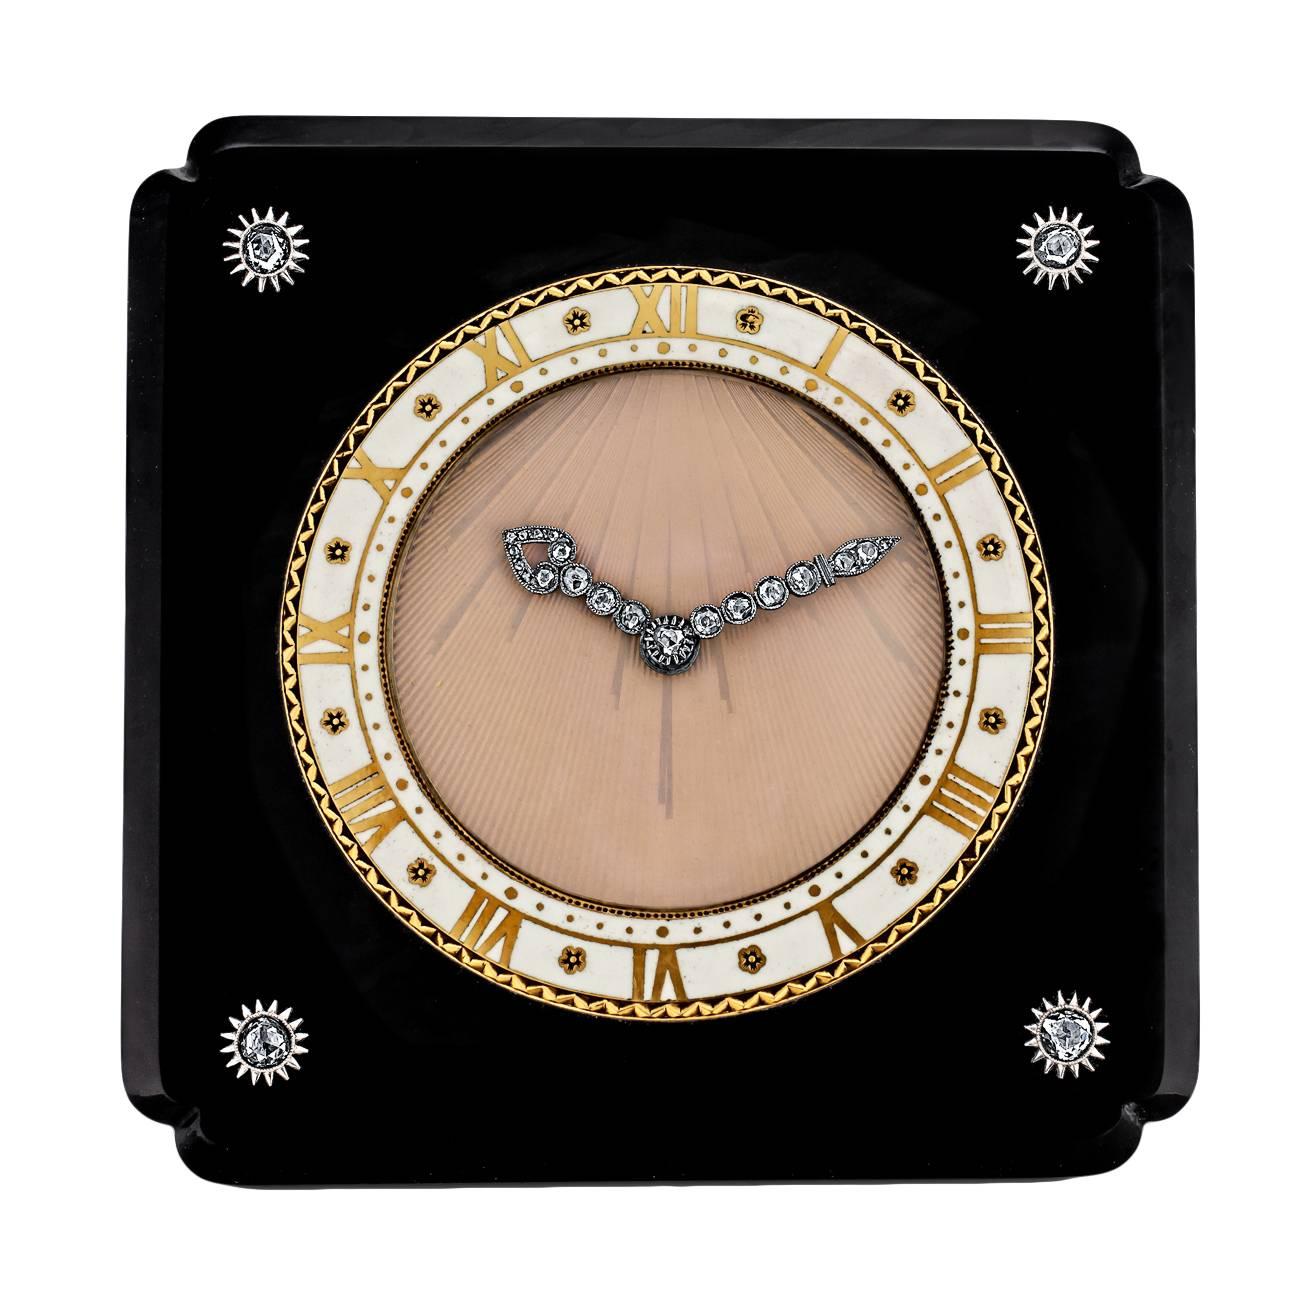 Cartier Important Art Deco Onyx Diamond Desk Clock